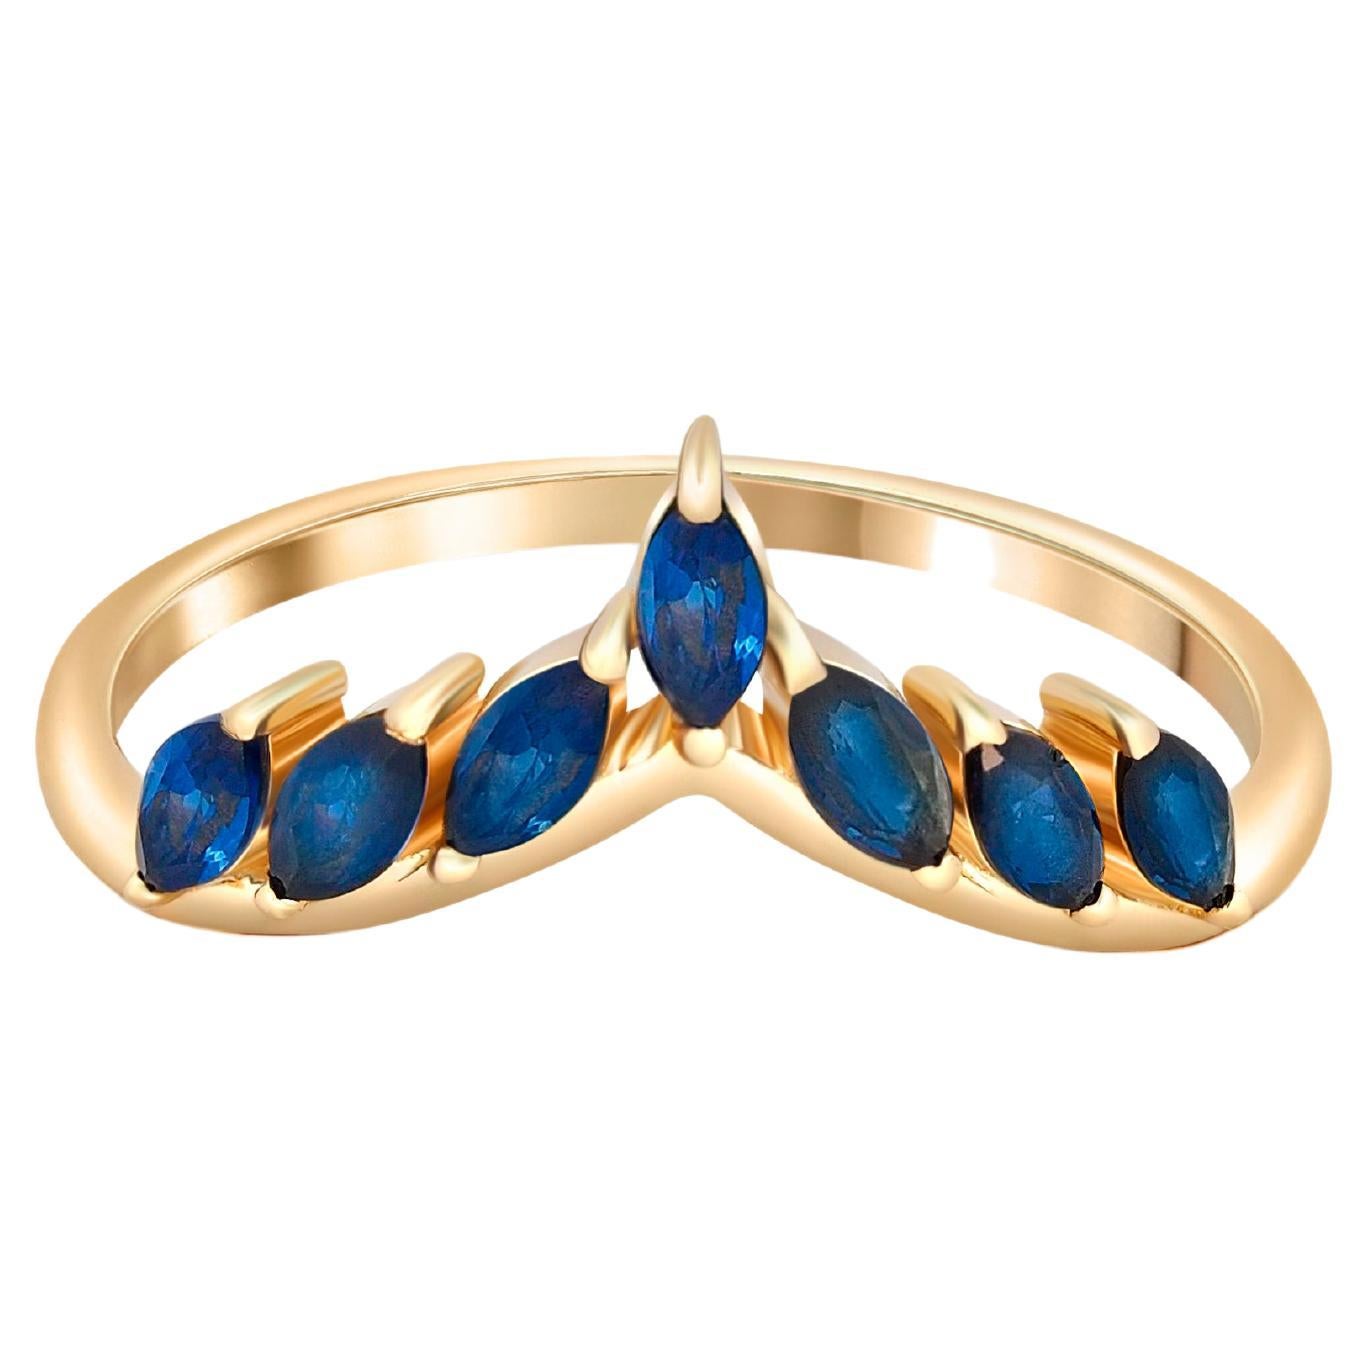 For Sale:  14 Karat Gold Tiara Ring with Genuine Sapphires